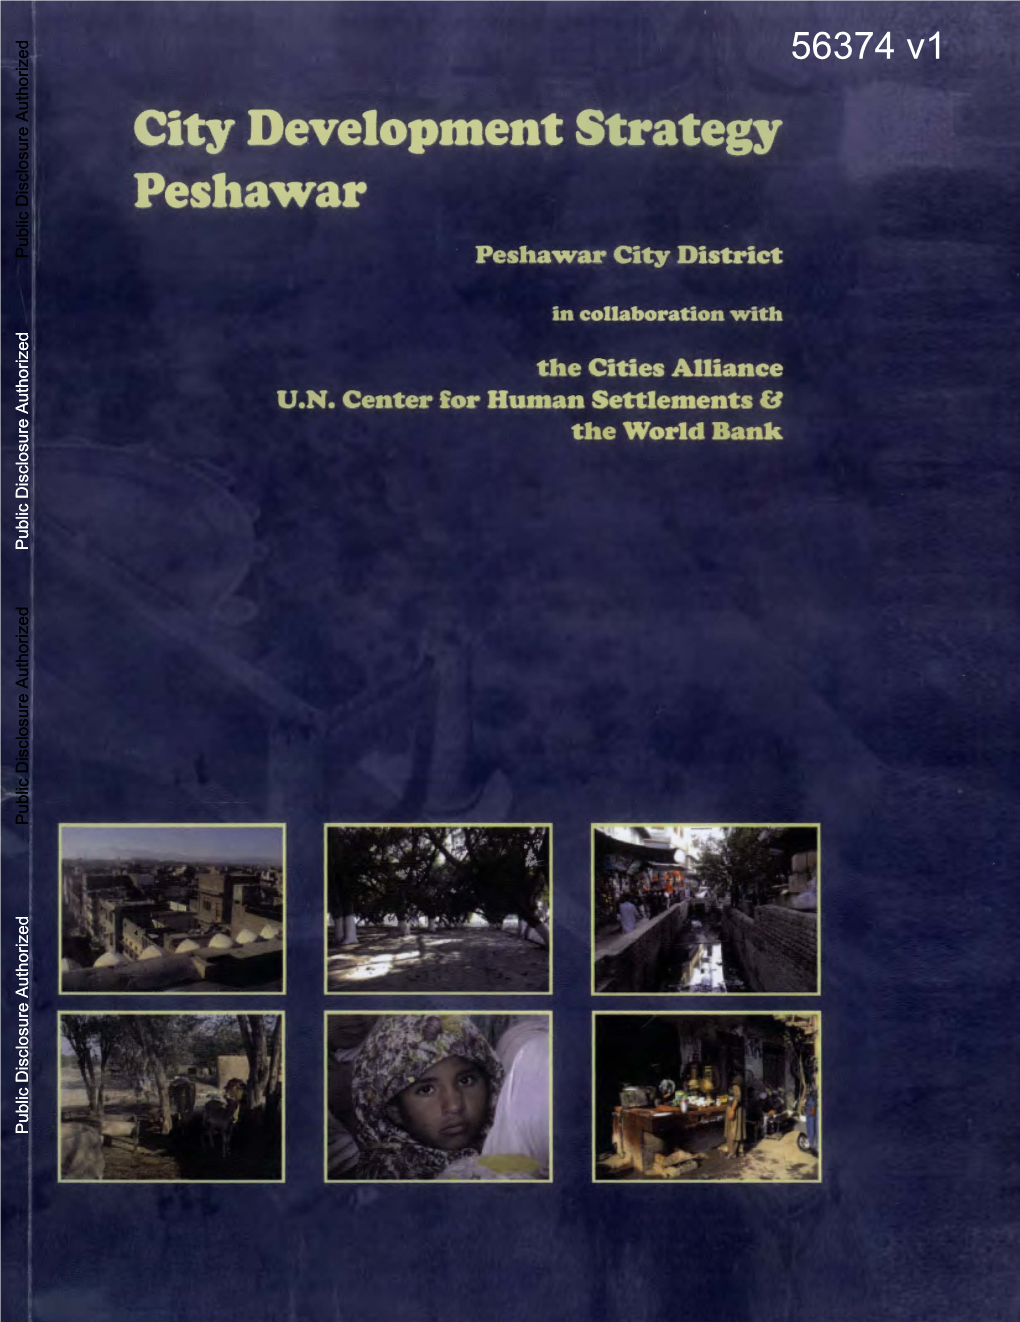 3. Peshawar City District